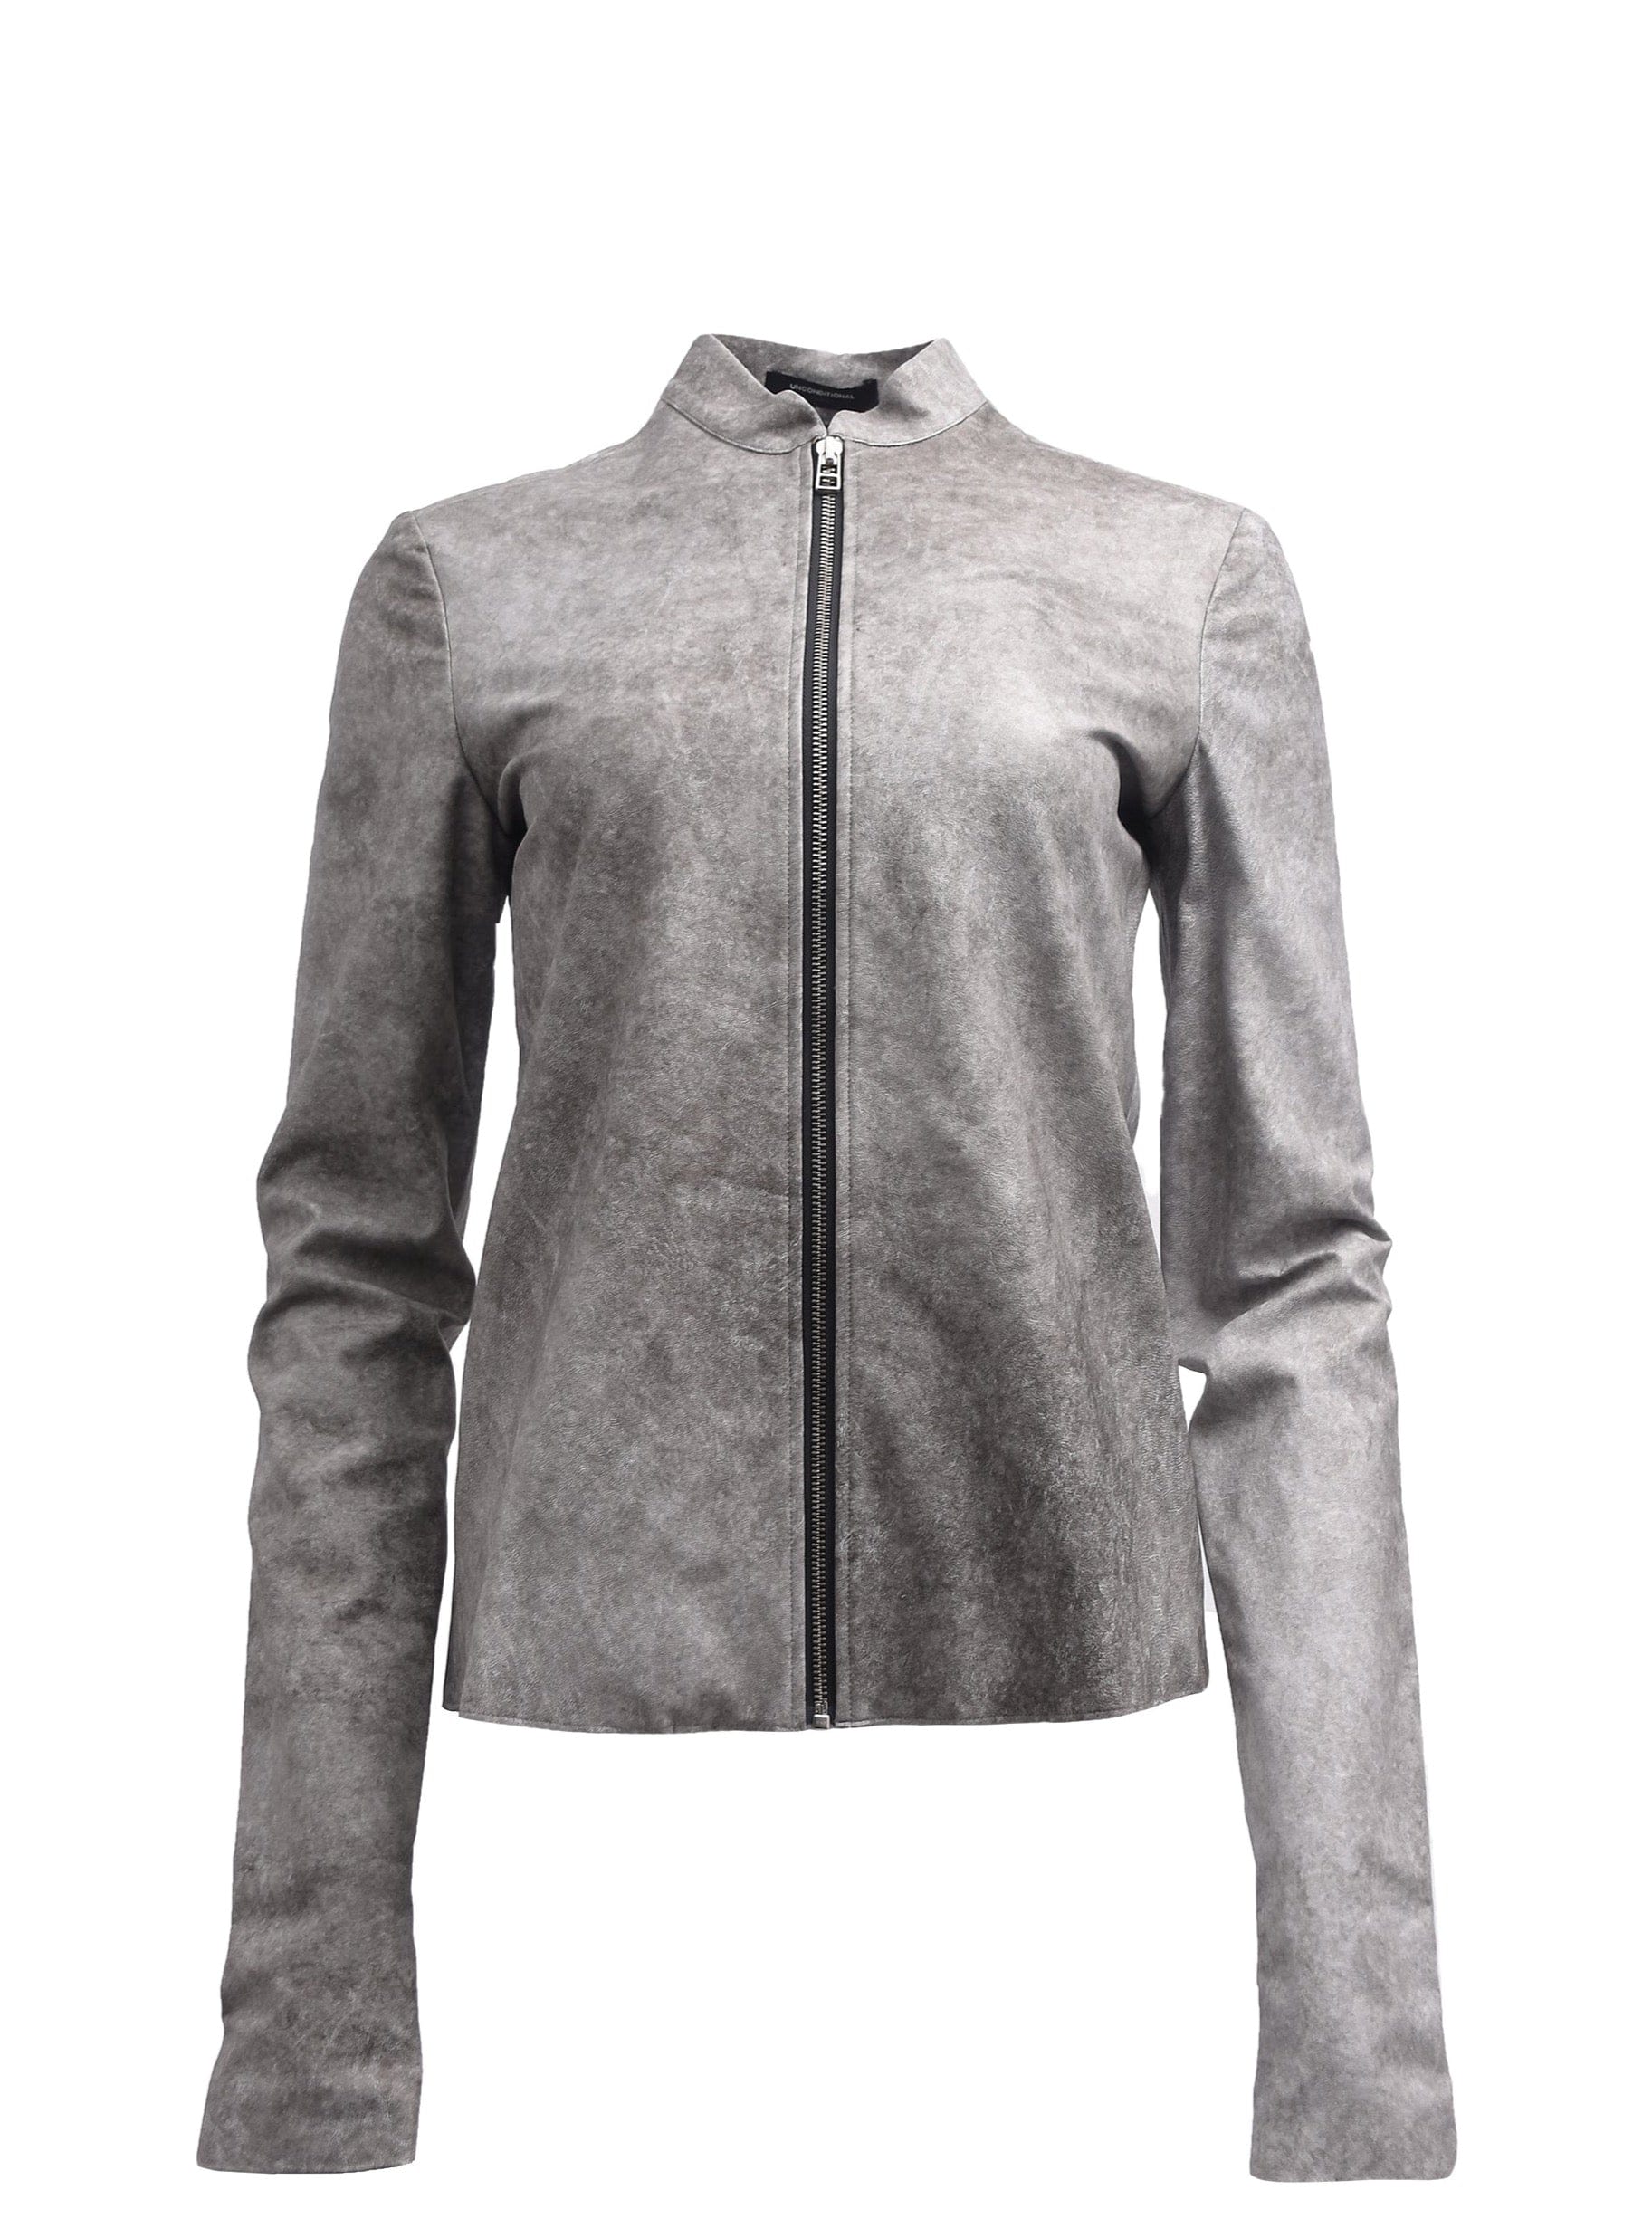 Vintage Leather Jacket in Shadow Grey